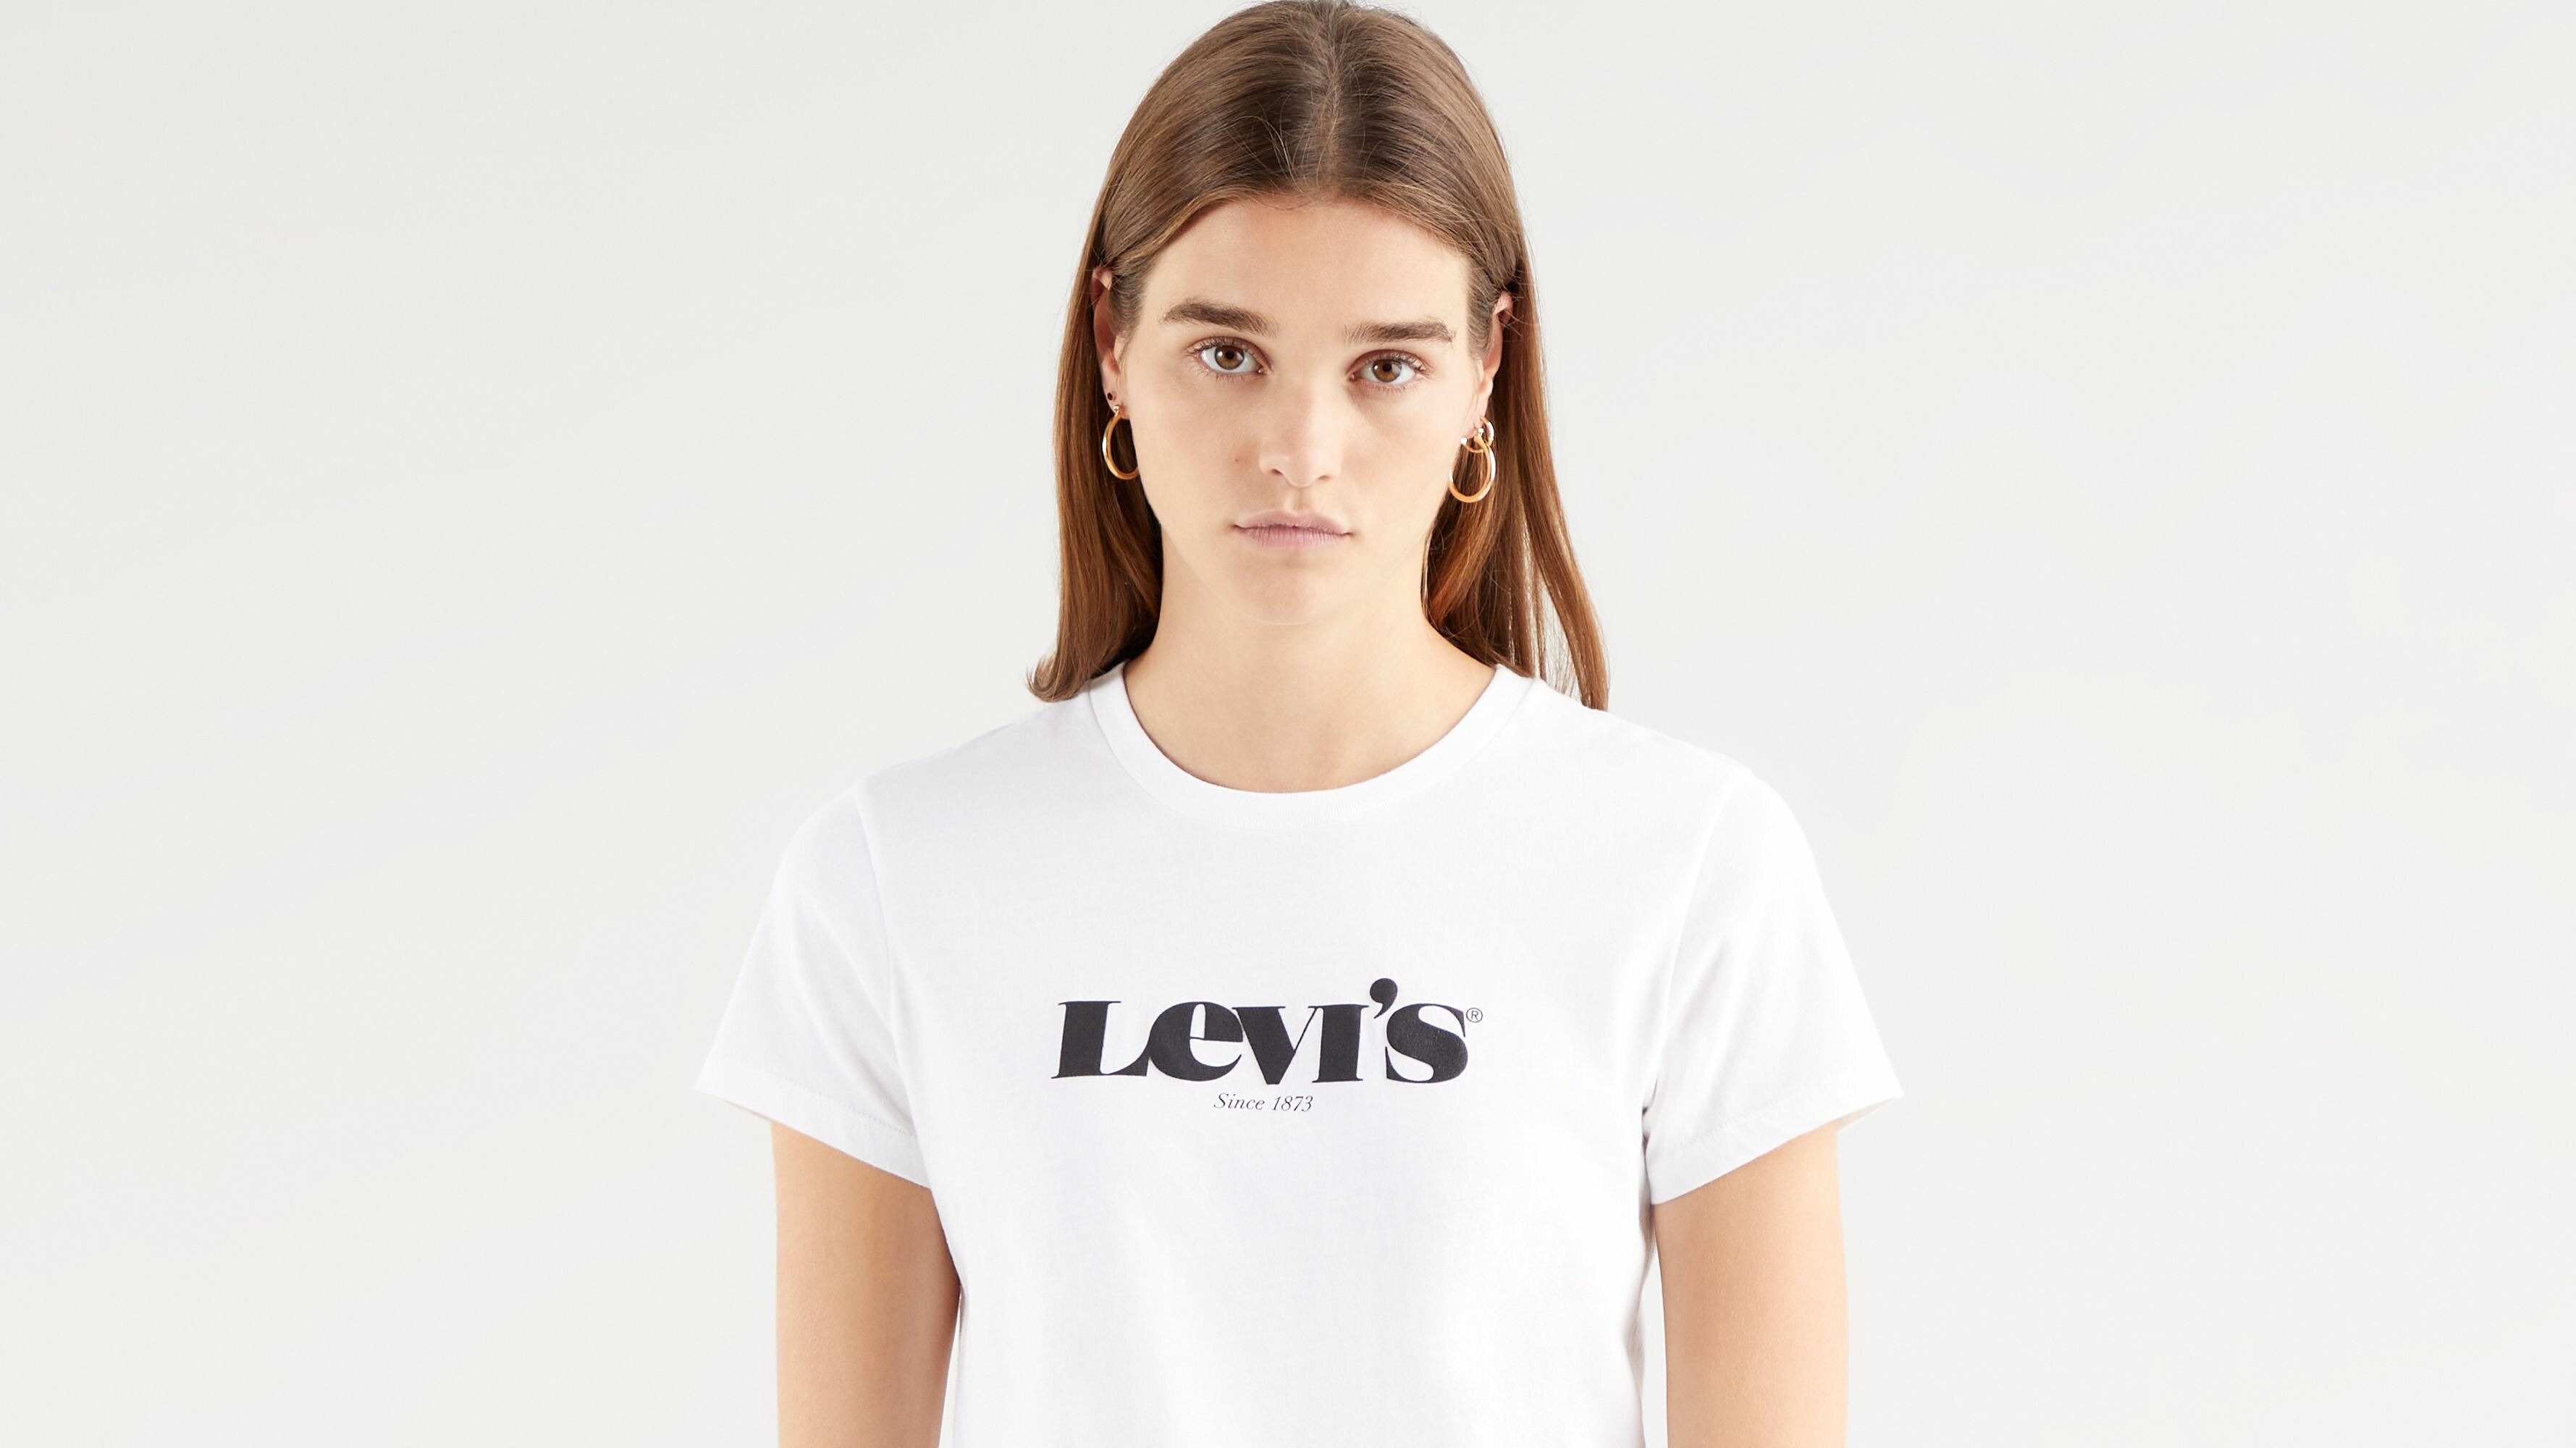 Levis Kadın T-Shirt 17369-1249 